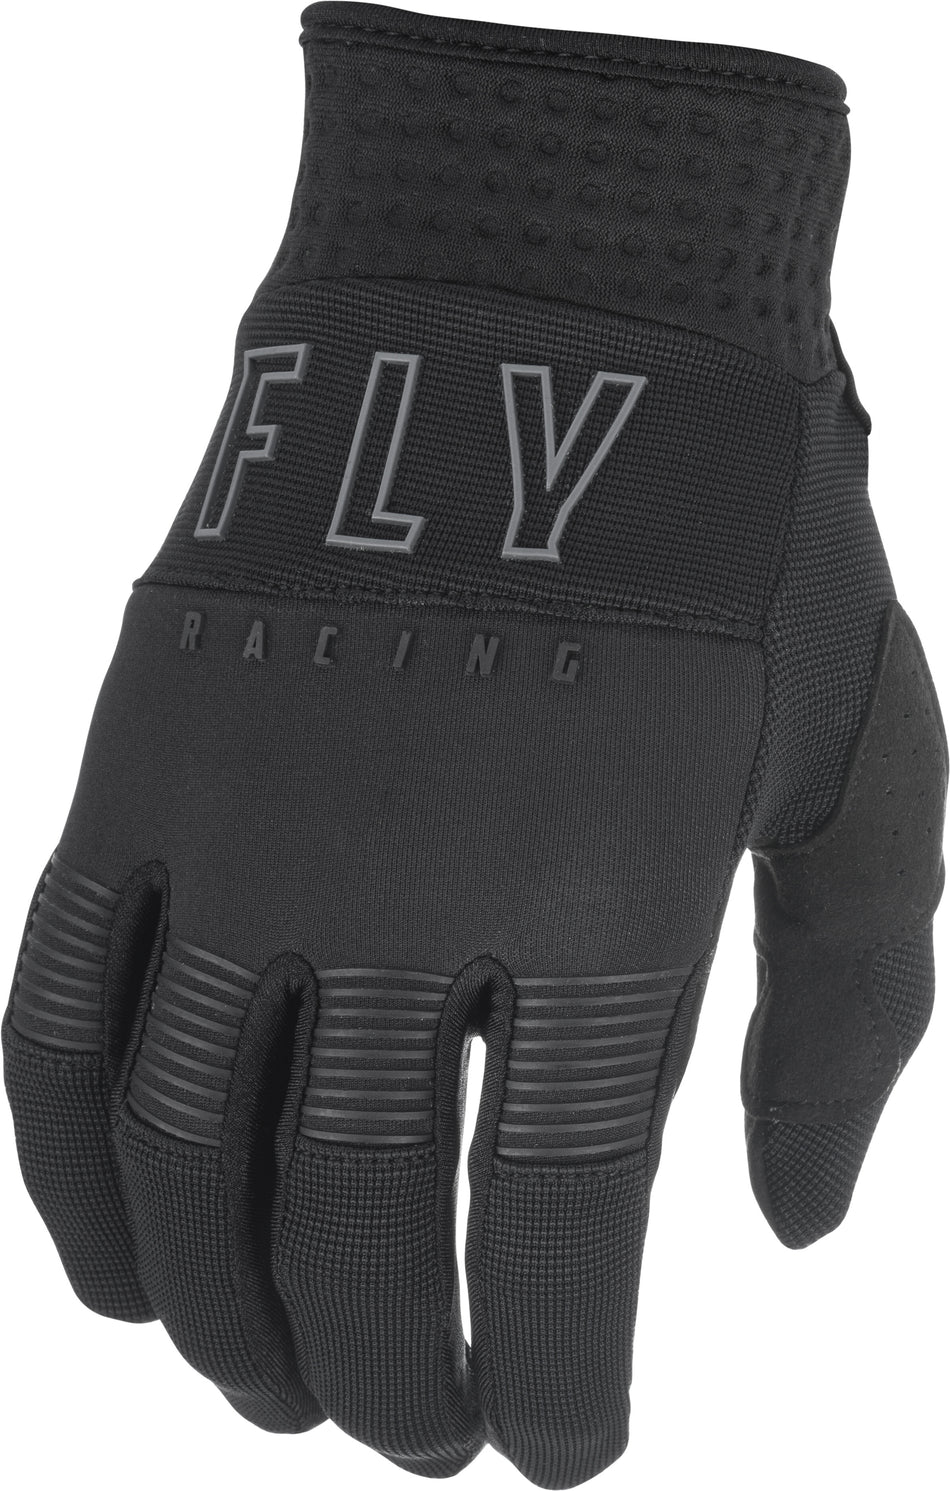 FLY RACING F-16 Gloves Black Sz 09 374-91709